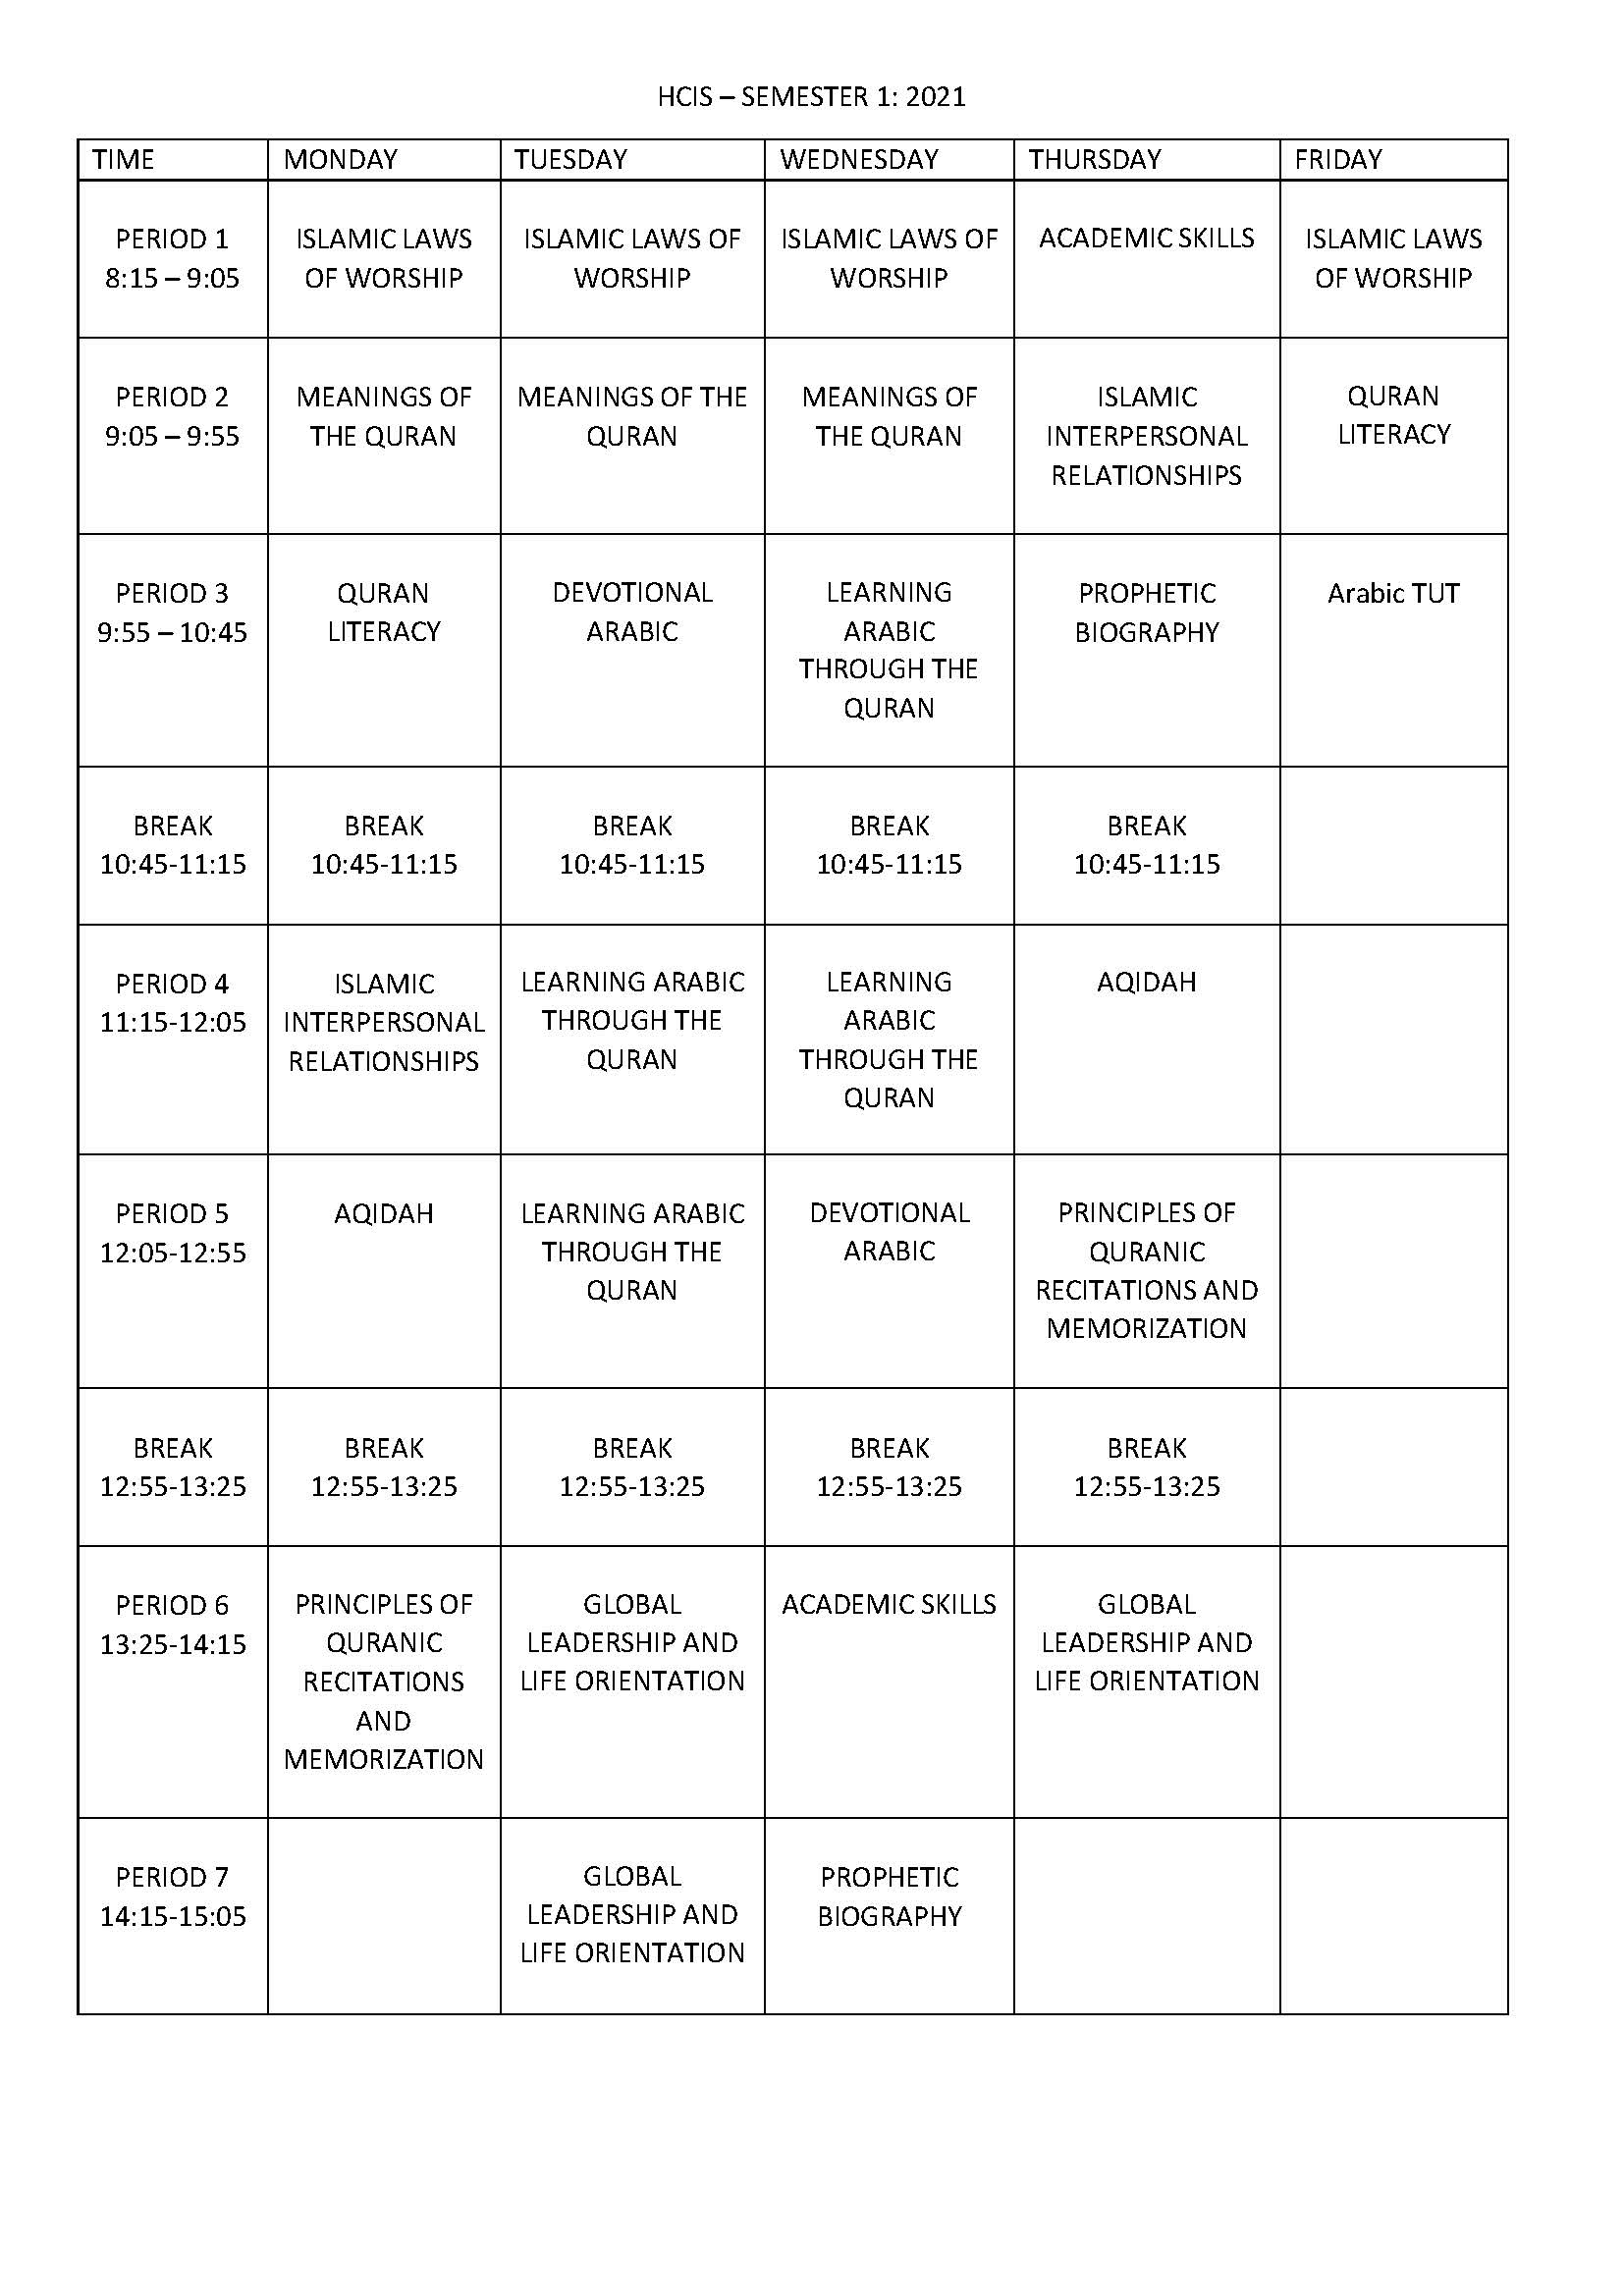 HCIS Timetable Semester 1 2021